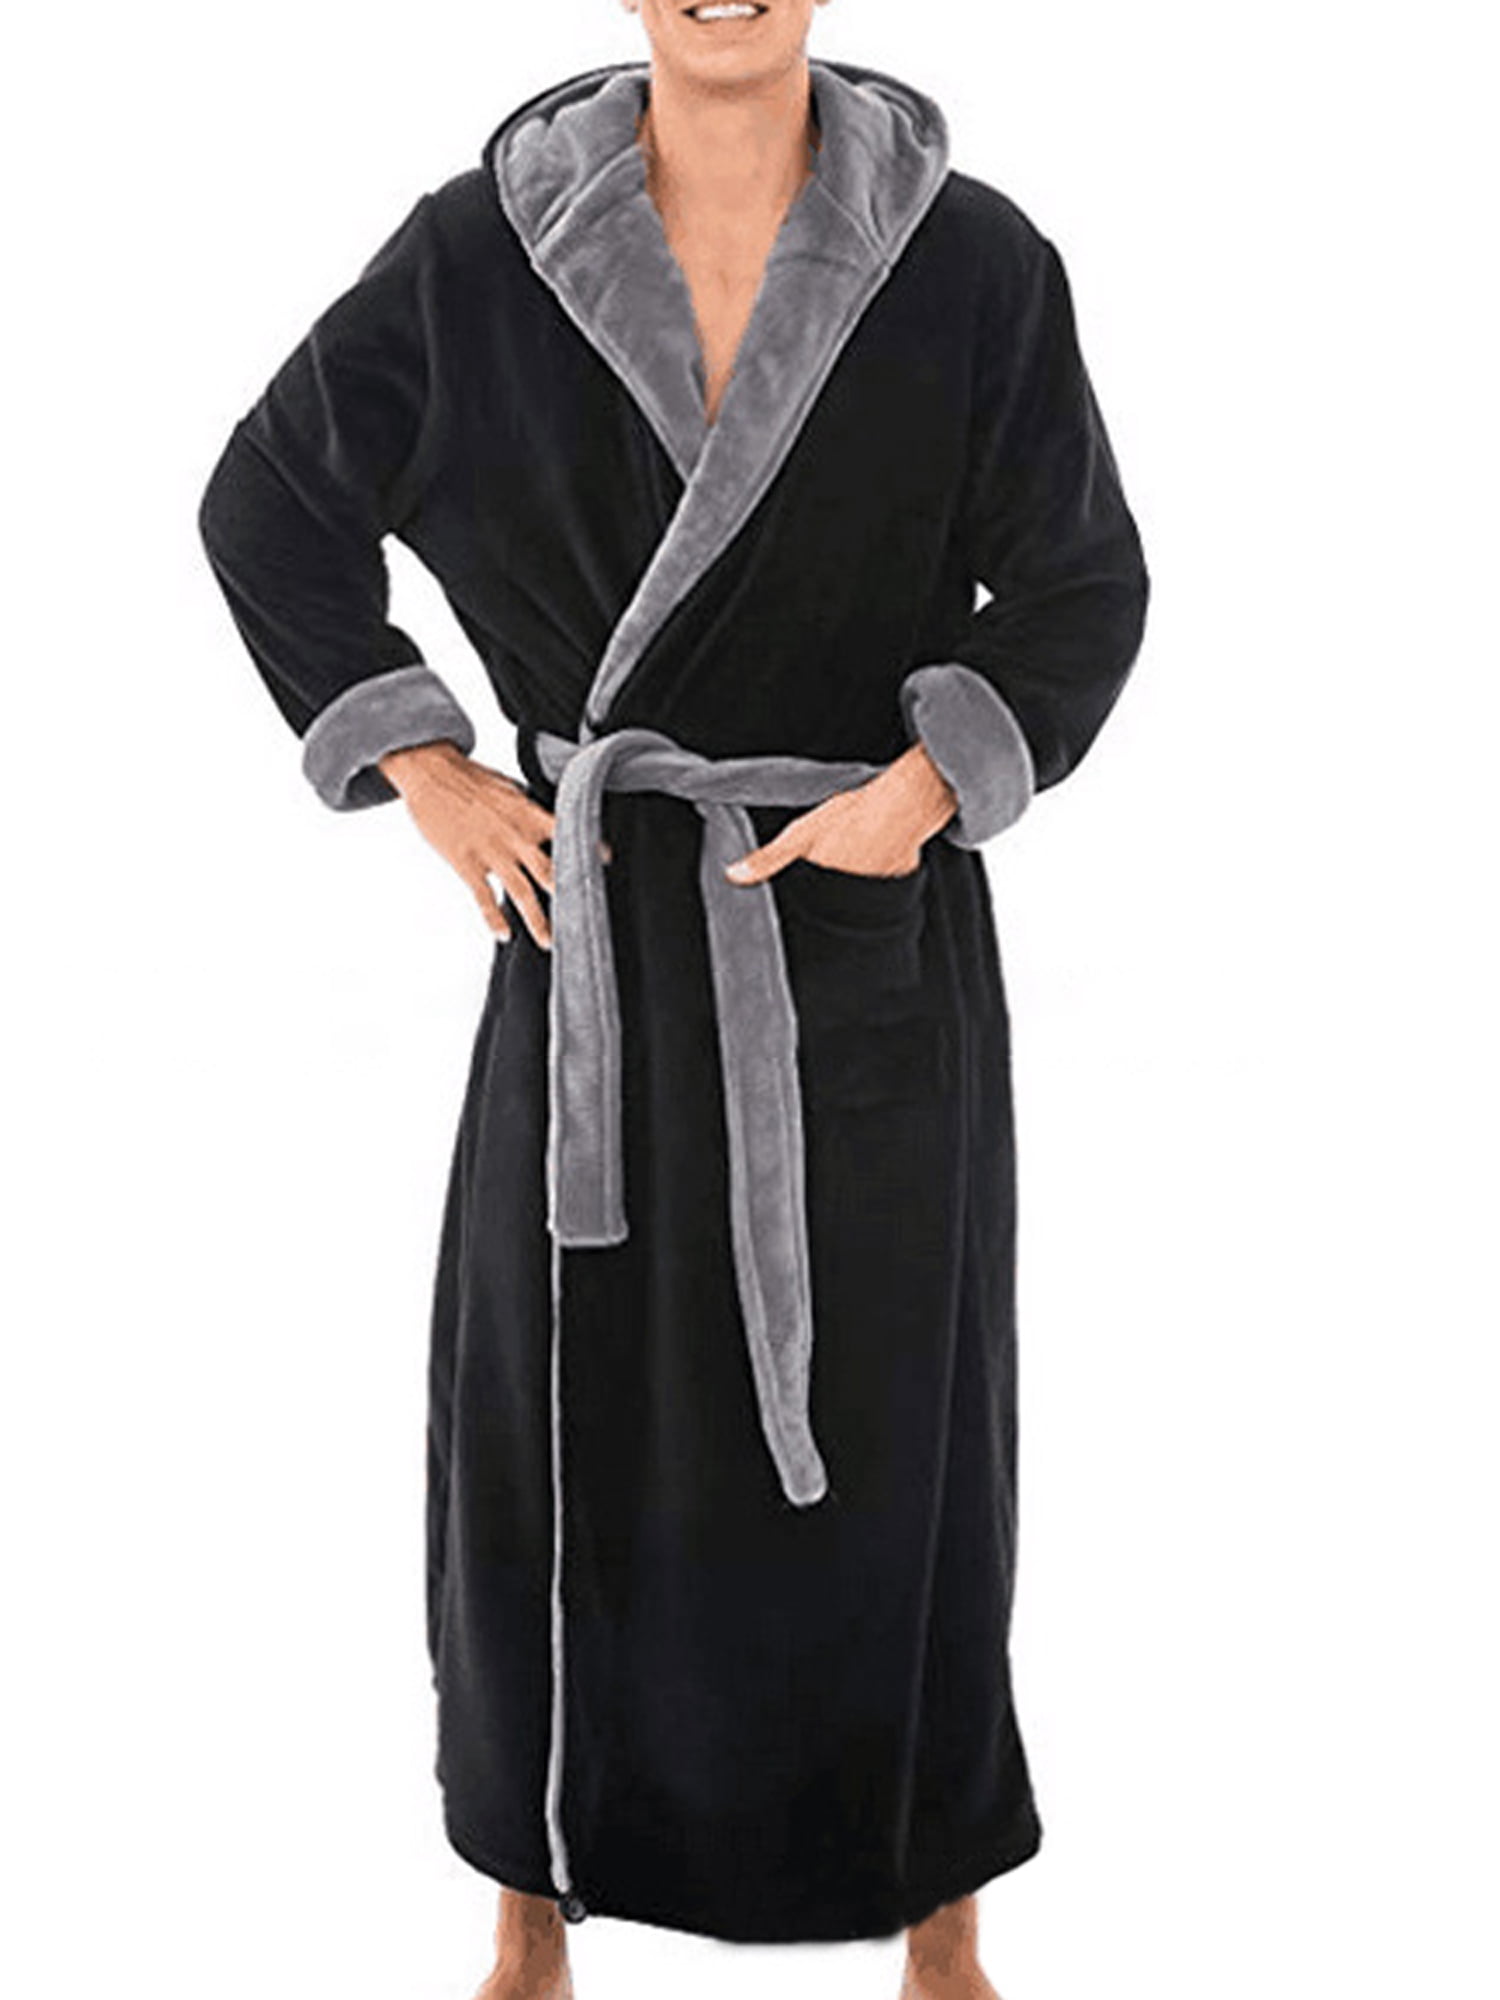 DISHANG Men's Ultra Soft Fleece Robe with Hood Pockets Warm and Cozy Sleepwear 